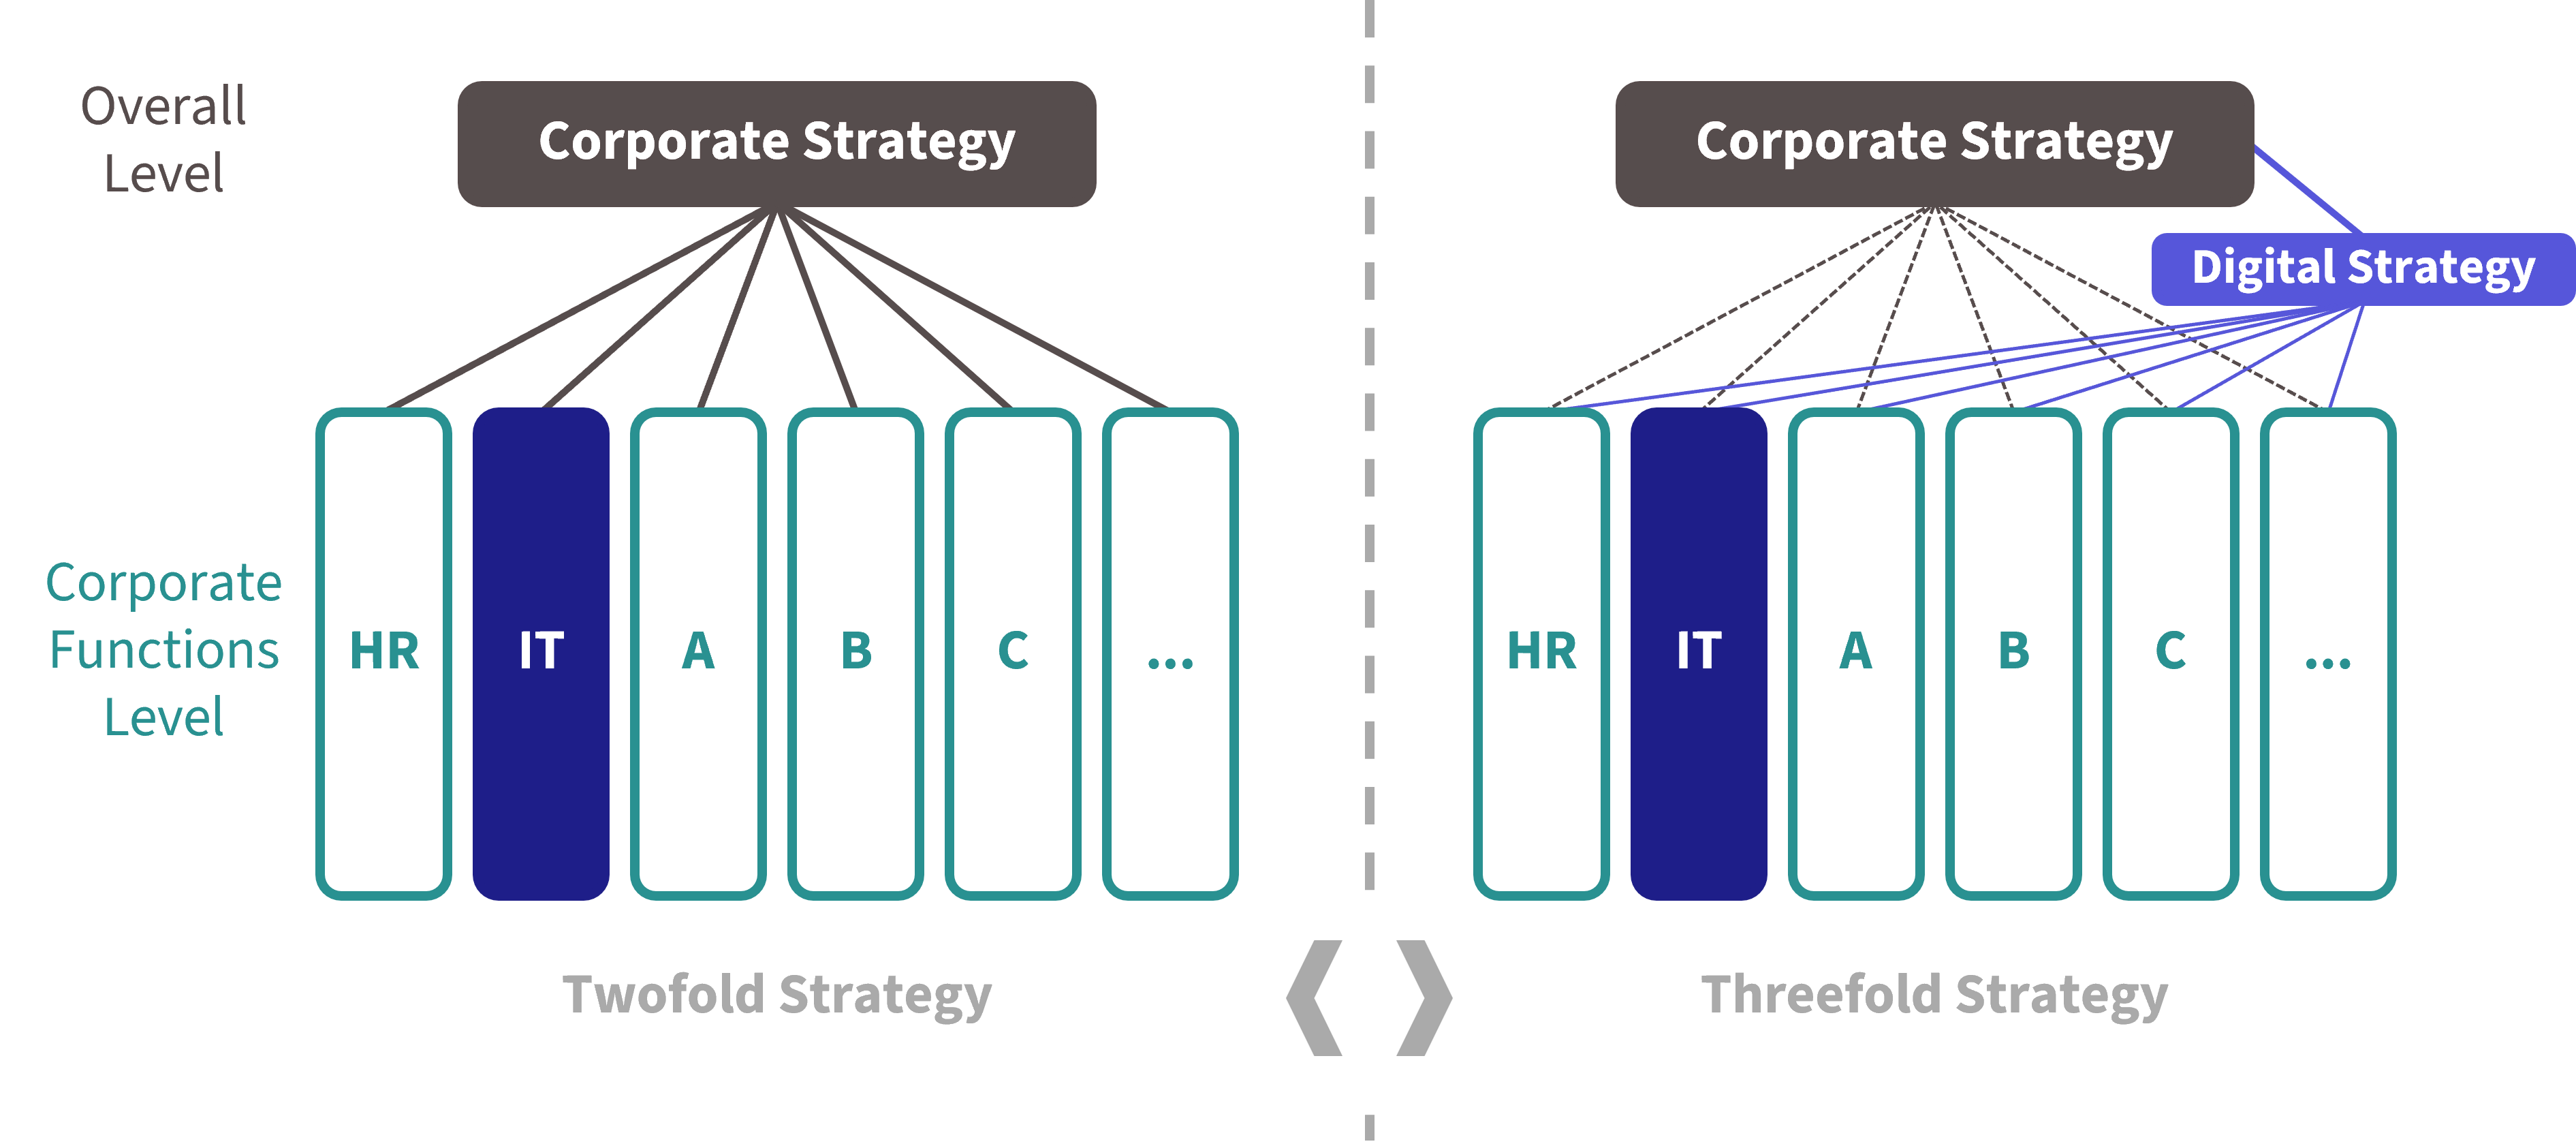 CKC Digital IT Strategy Meta Framework - Twofold Strategy vs. Threefold Strategy